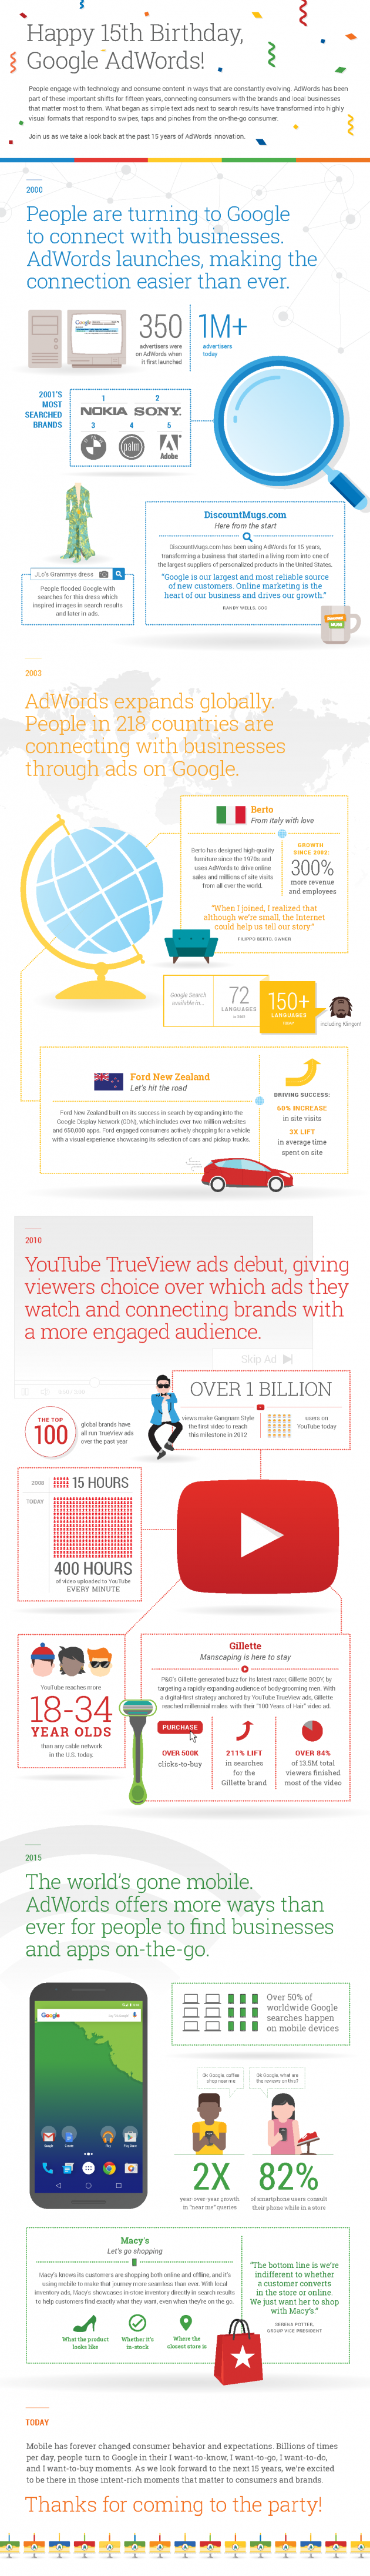 Google AdWords 15th Birthday Infographic